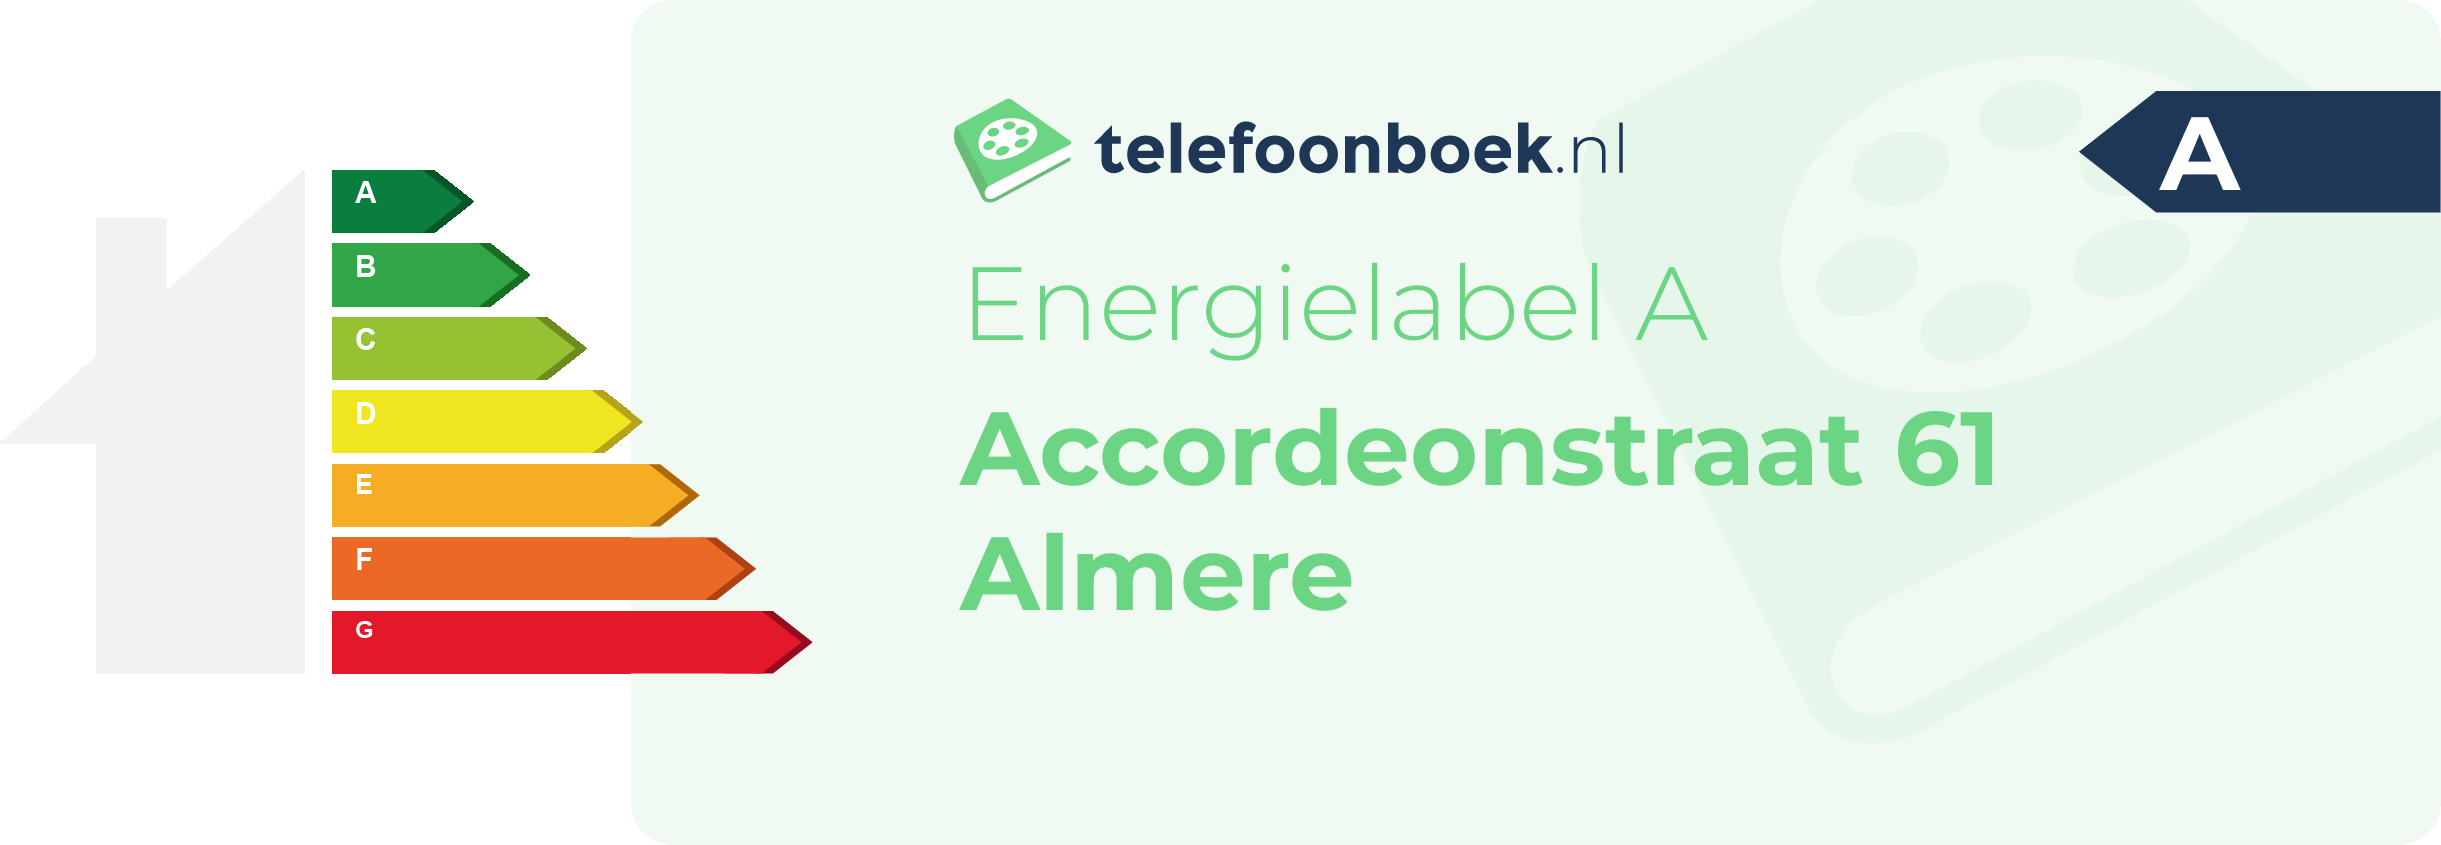 Energielabel Accordeonstraat 61 Almere